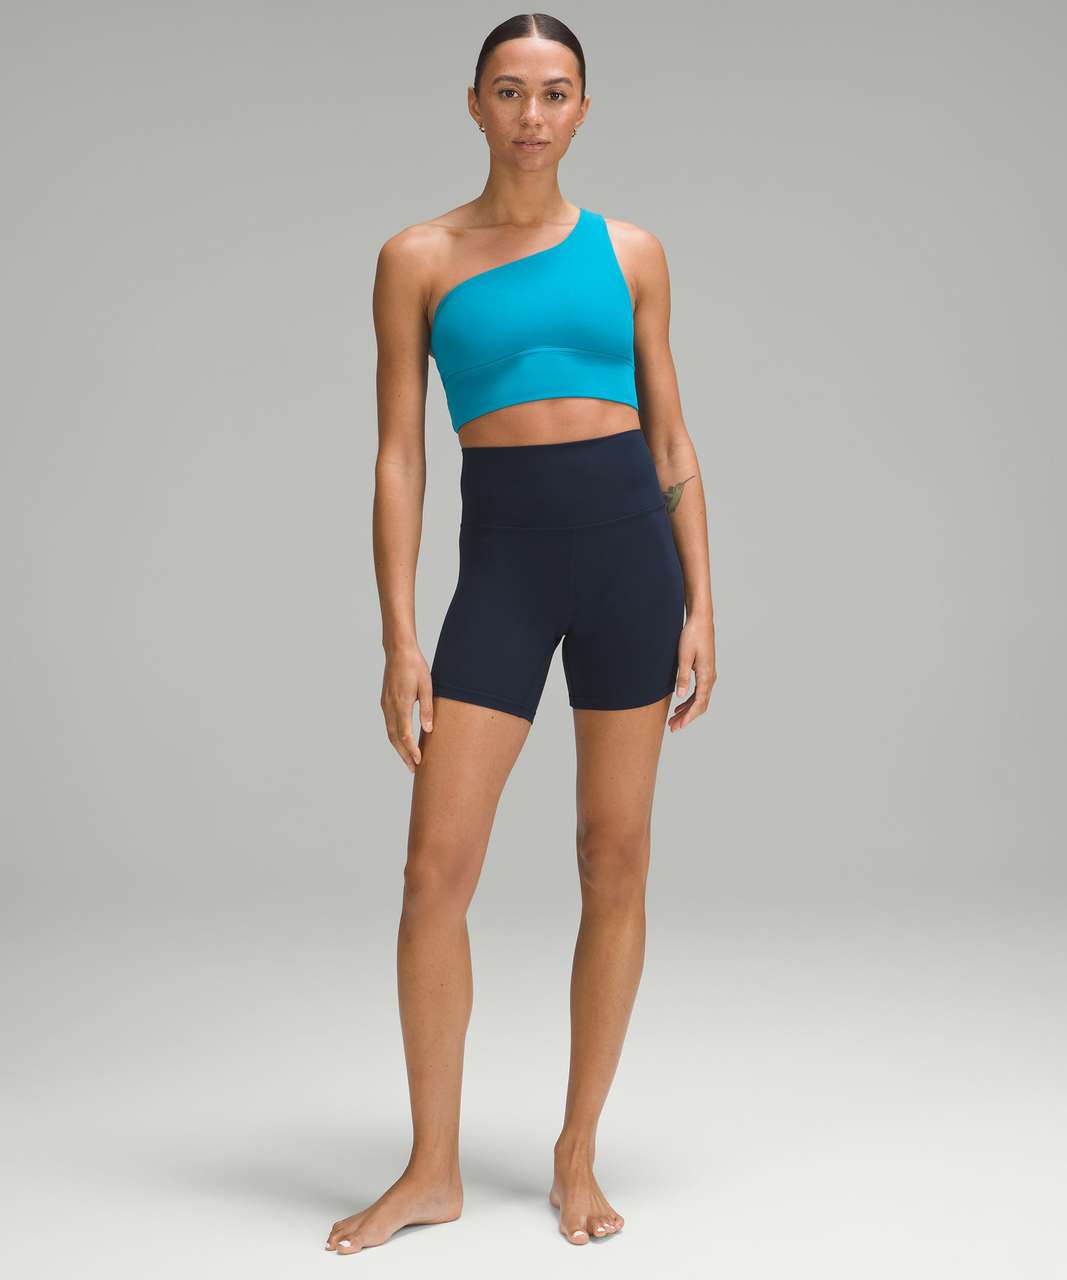 Cyan blue align leggings and asymmetrical bra size 6 in both : r/lululemon